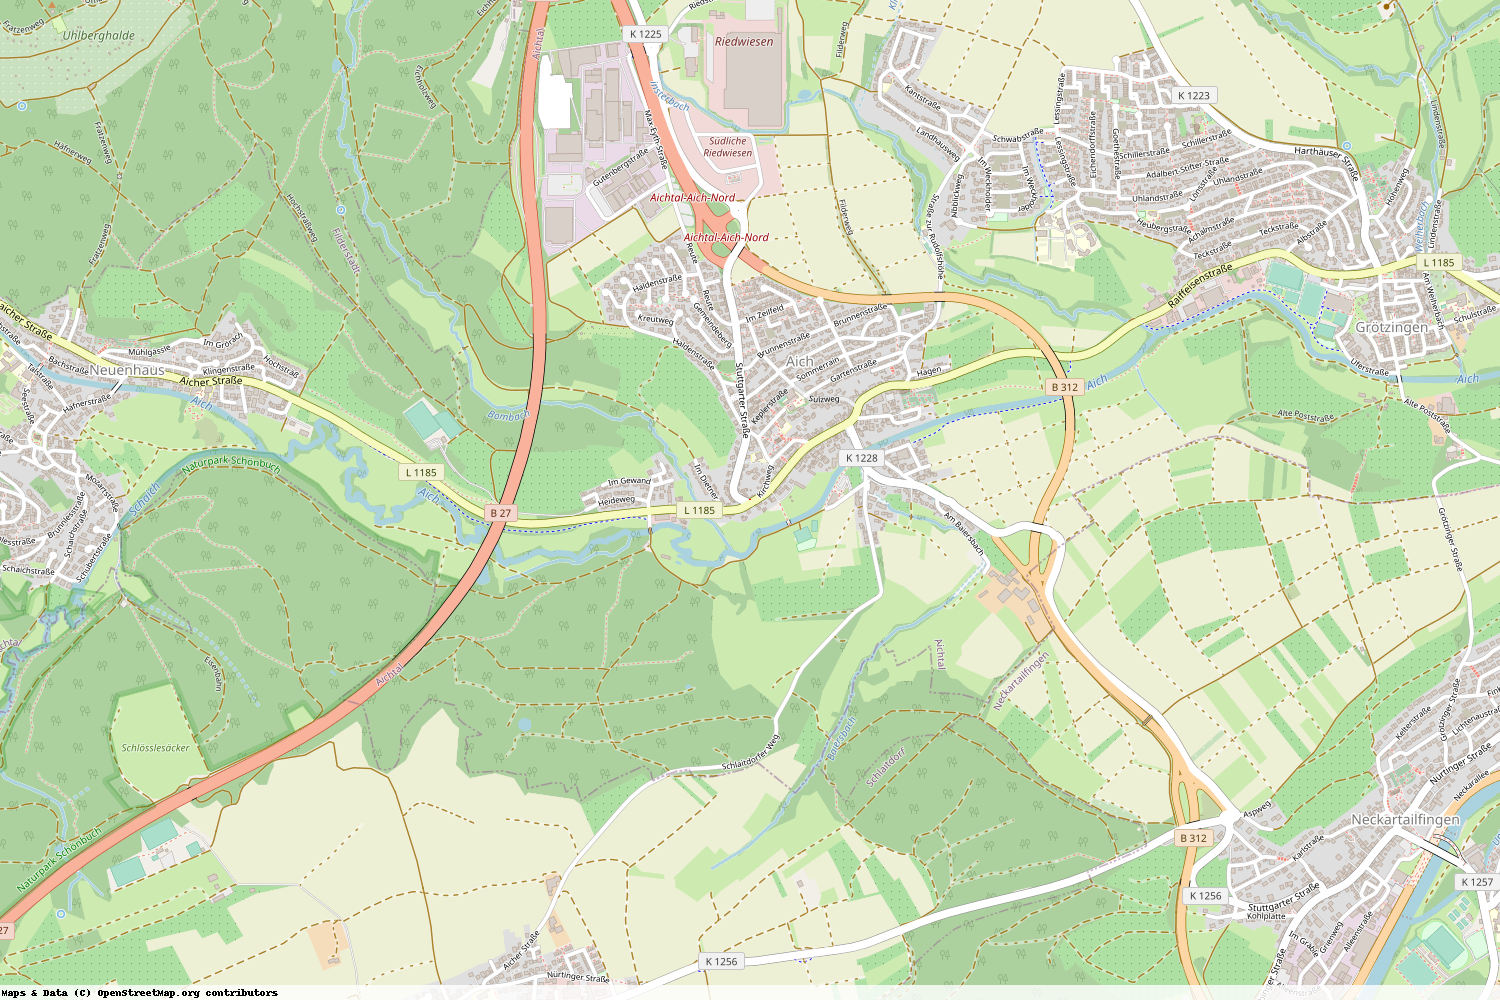 Ist gerade Stromausfall in Baden-Württemberg - Esslingen - Aichtal?